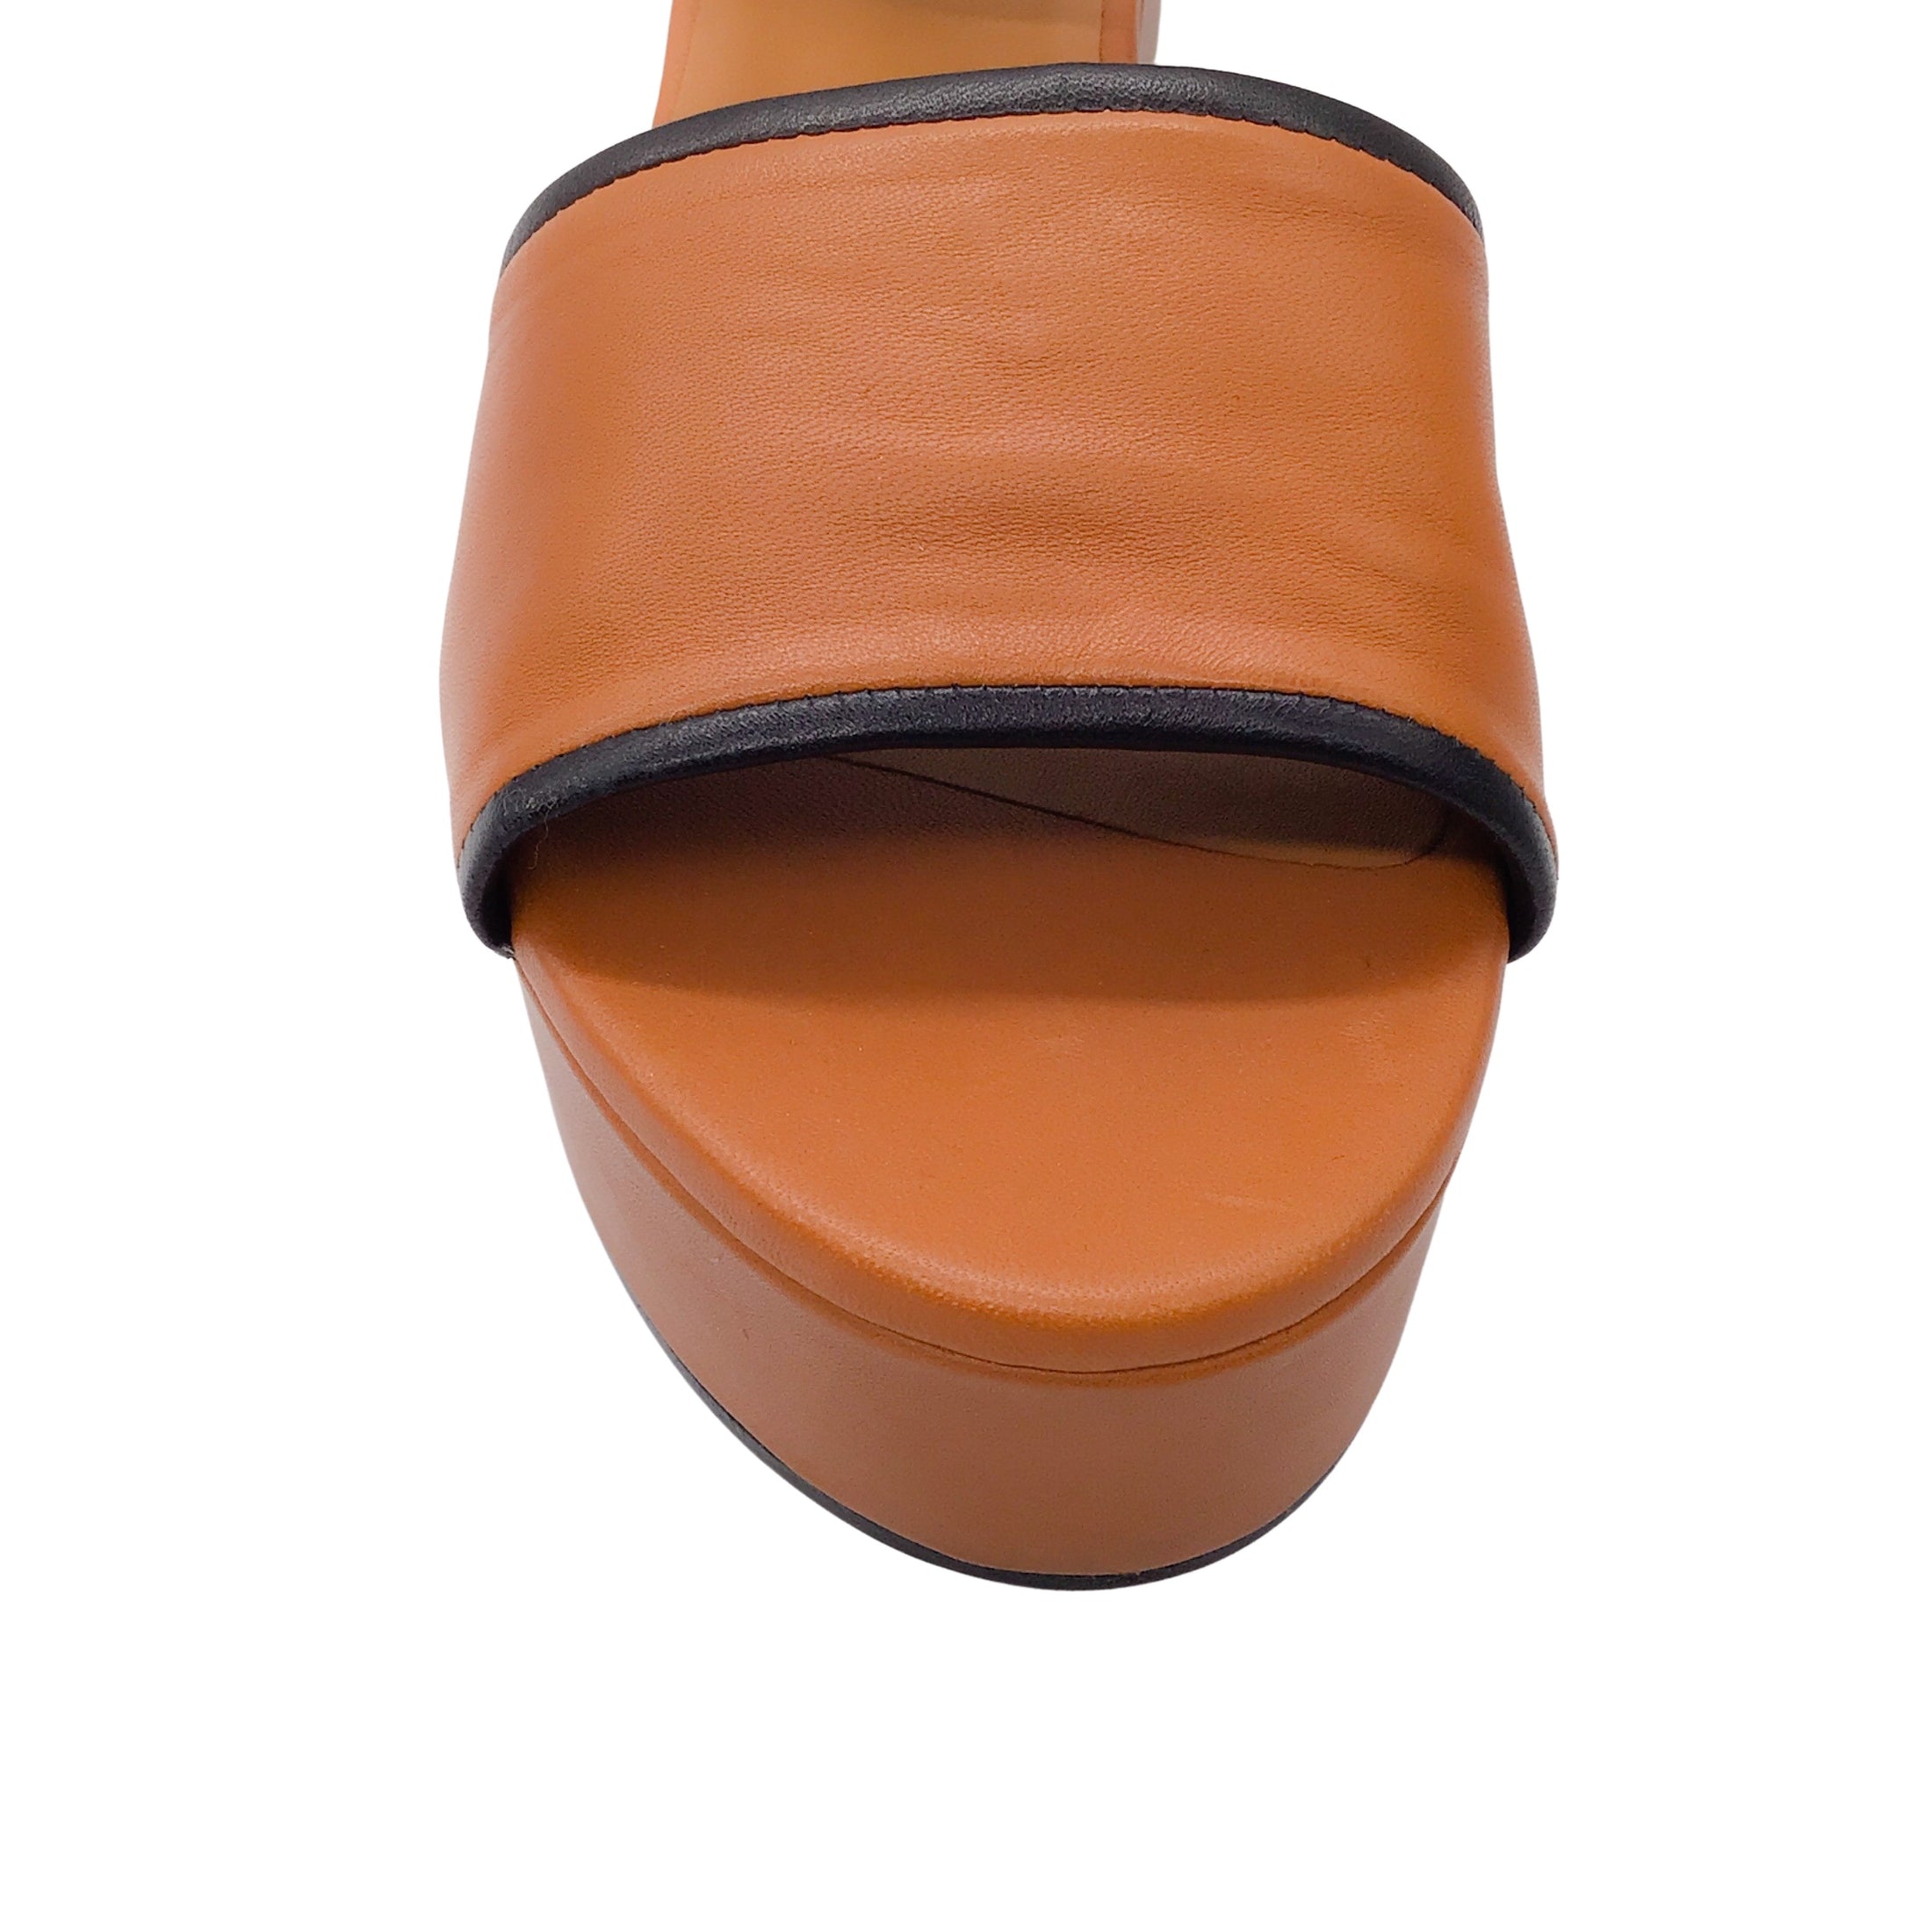 Robert Clergerie Light Brown / Black Trim Platform Leather Sandals